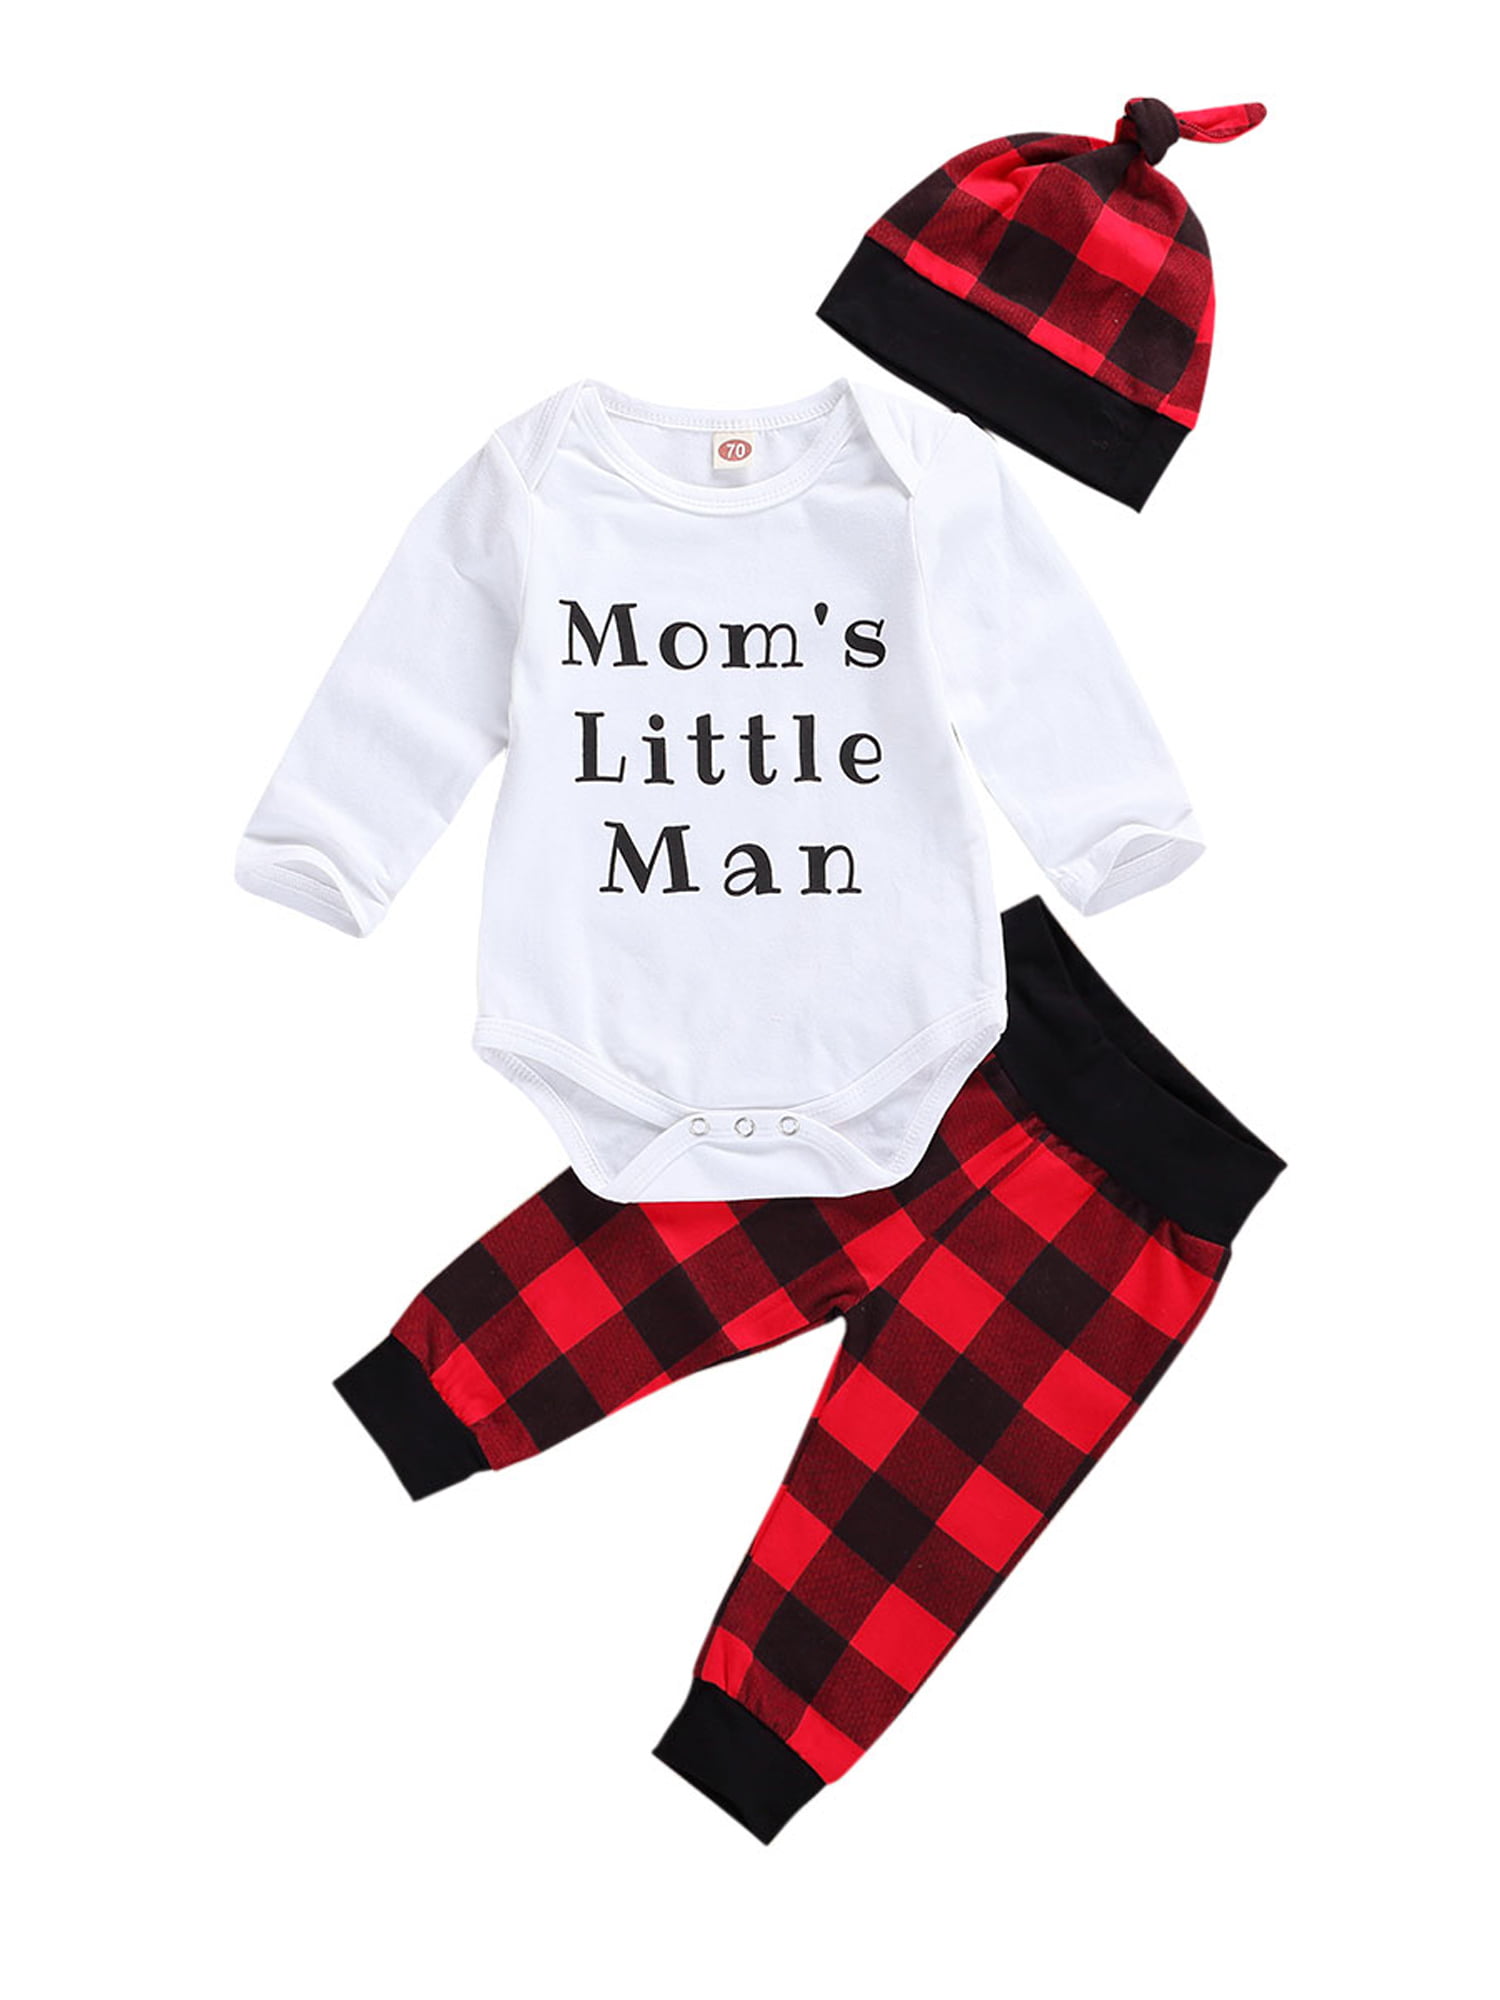 Newborn Baby Boy Clothes Crew Letter Print Romper Plaid Pants+Hat 3pcs Outfits Set Soft Breathable Fabric